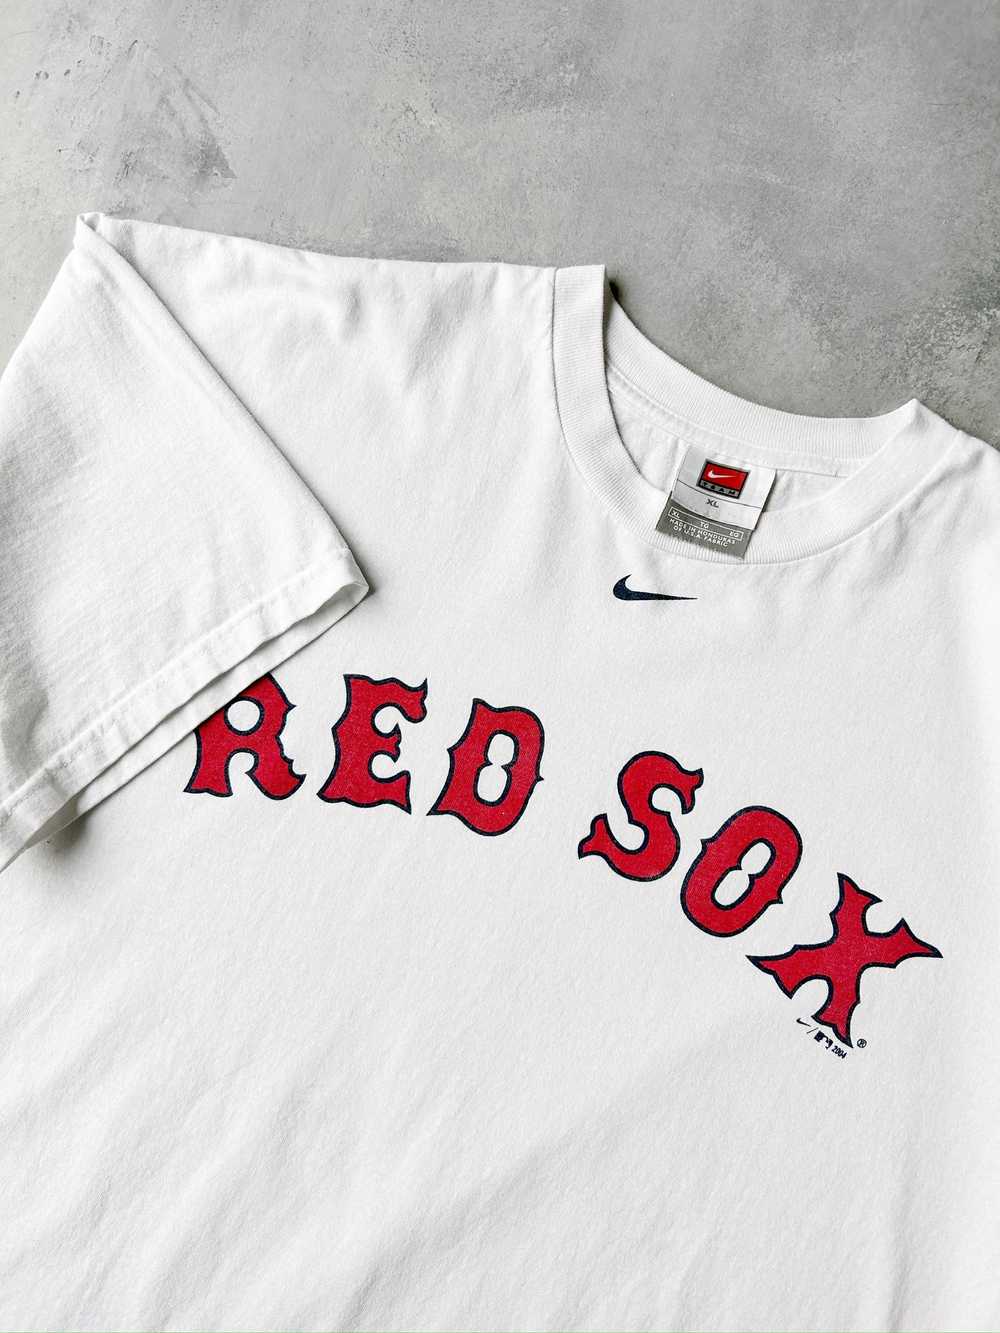 Boston Red Sox Nike T-Shirt '04 - XL - image 2